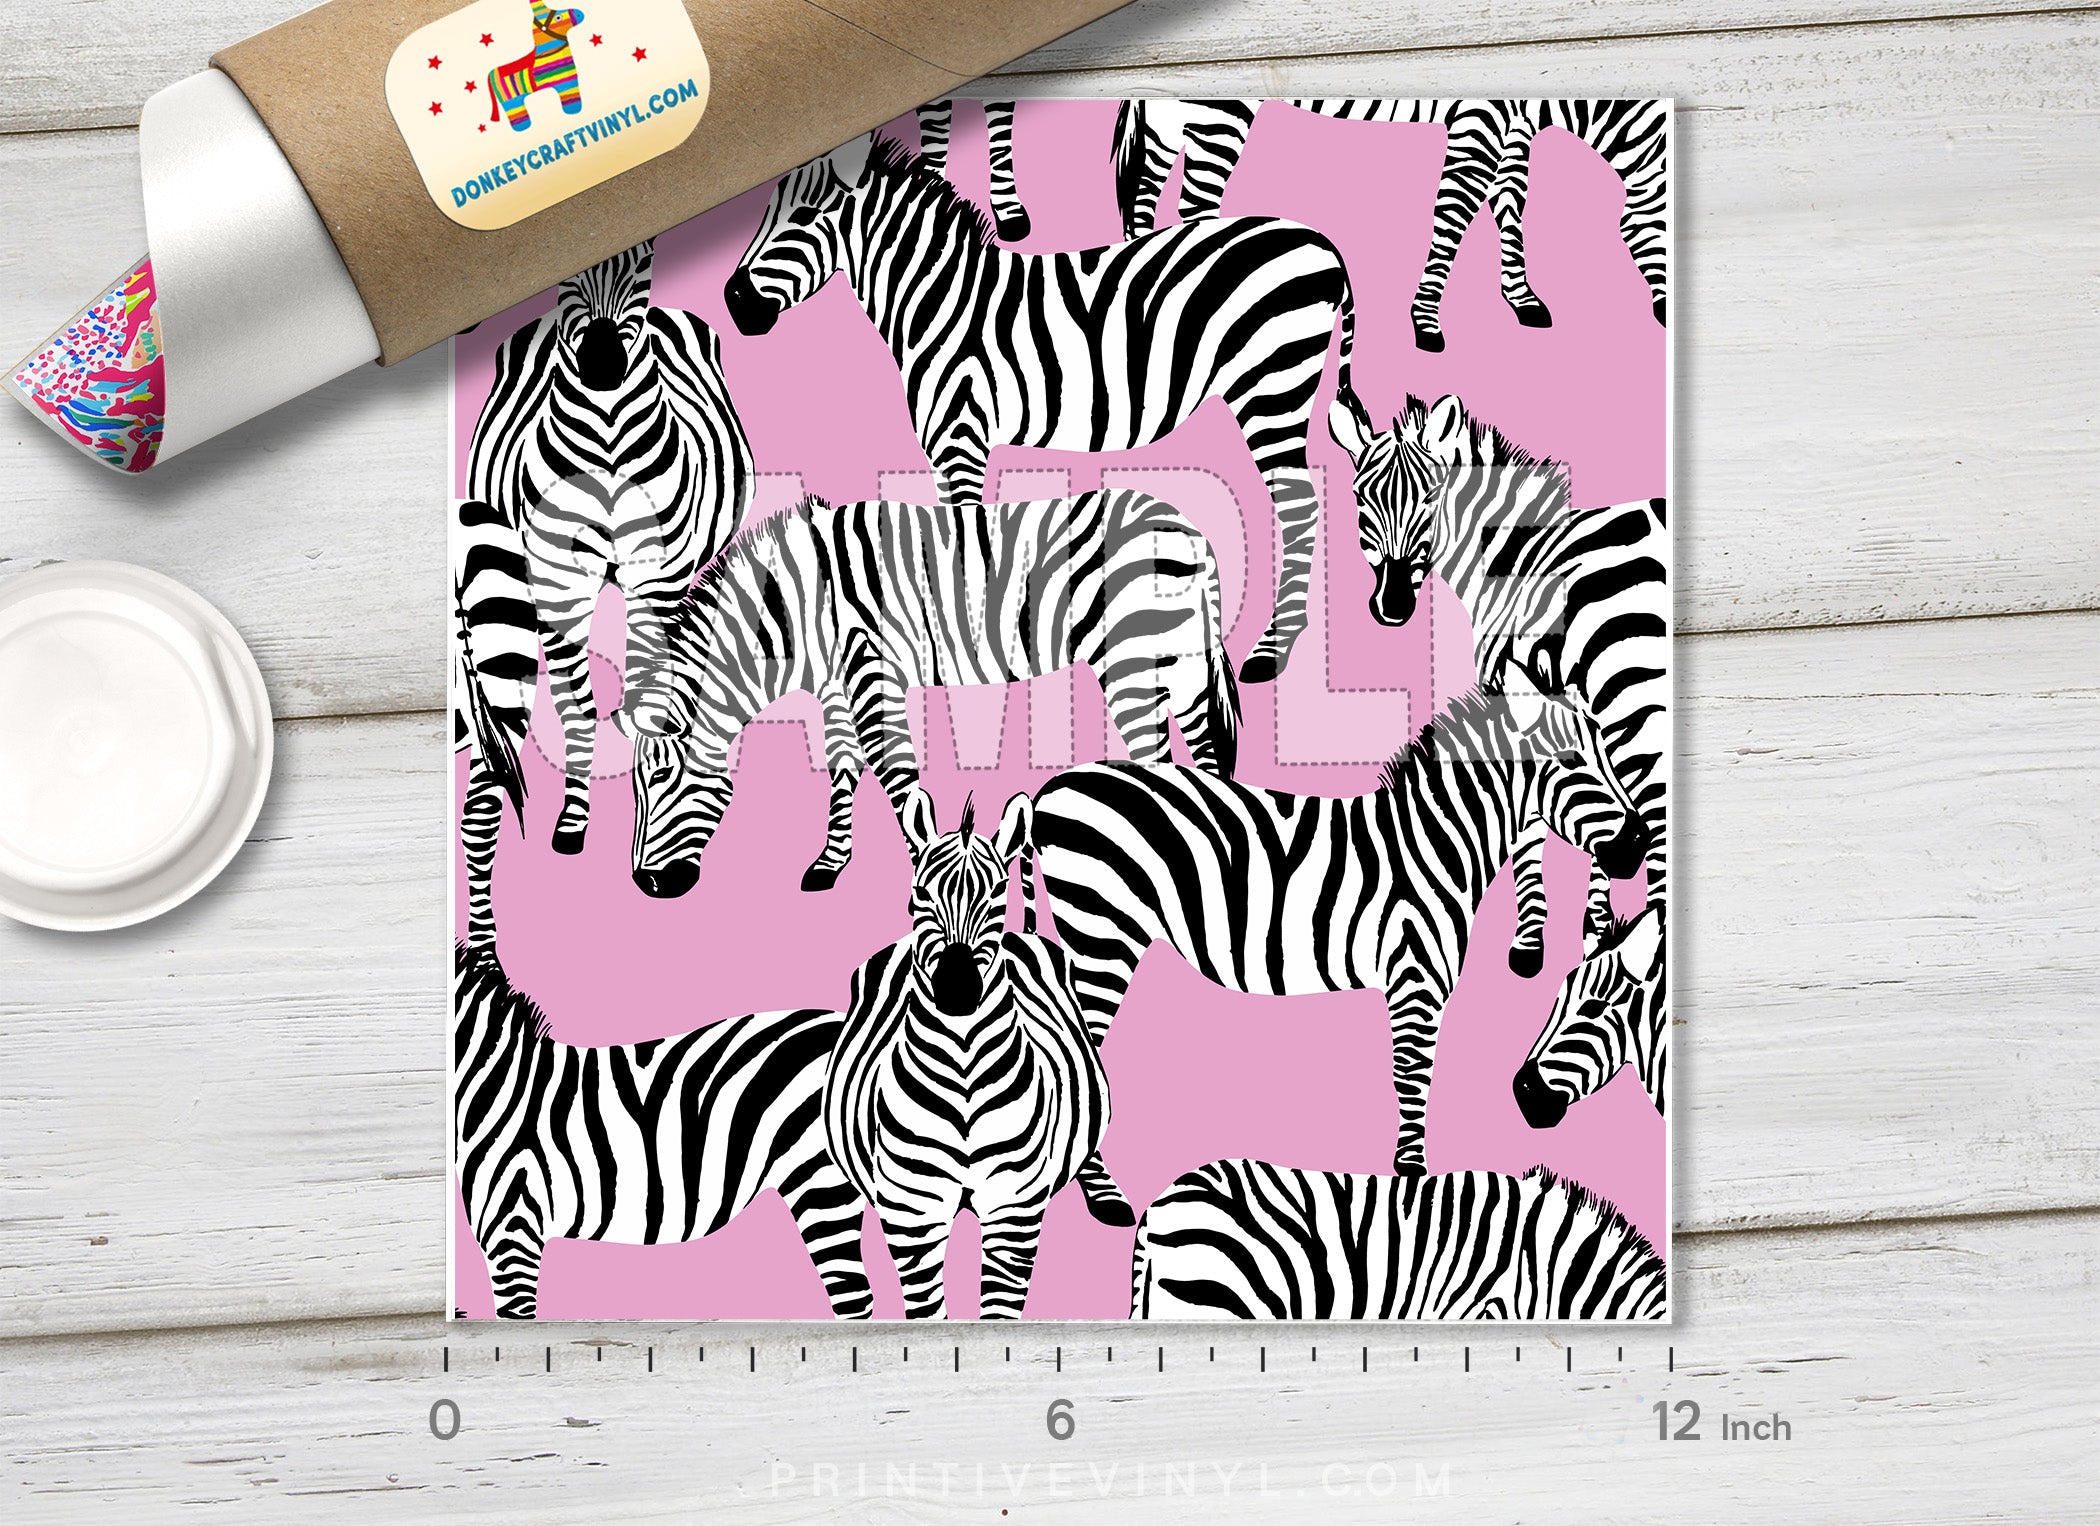 Zebra Patterned Adhesive Vinyl 248